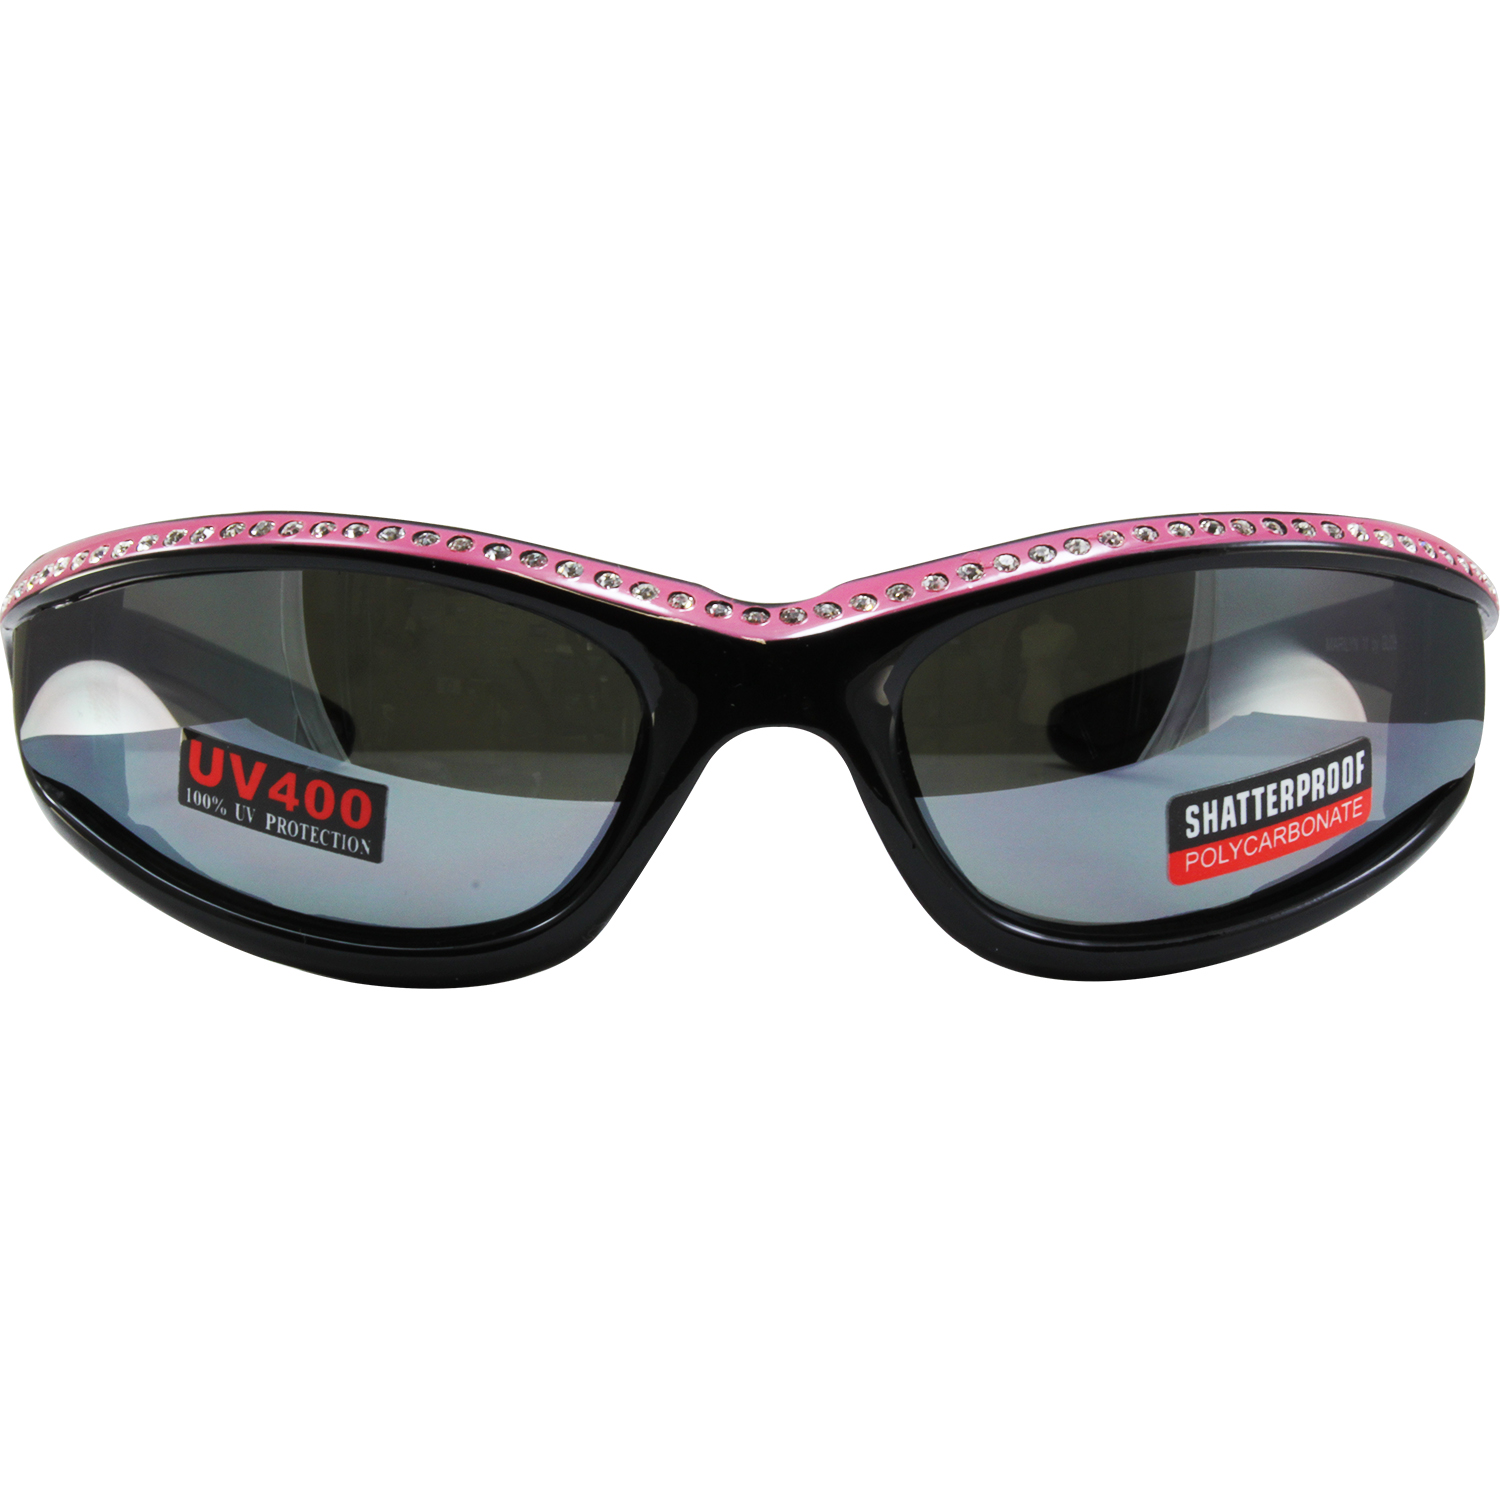 2 Pairs of Global Vision Eyewear Marilyn 11 Women's Black Sunglasses Pink + Orange Stripe Frames Flash Mirror Lenses - image 2 of 9